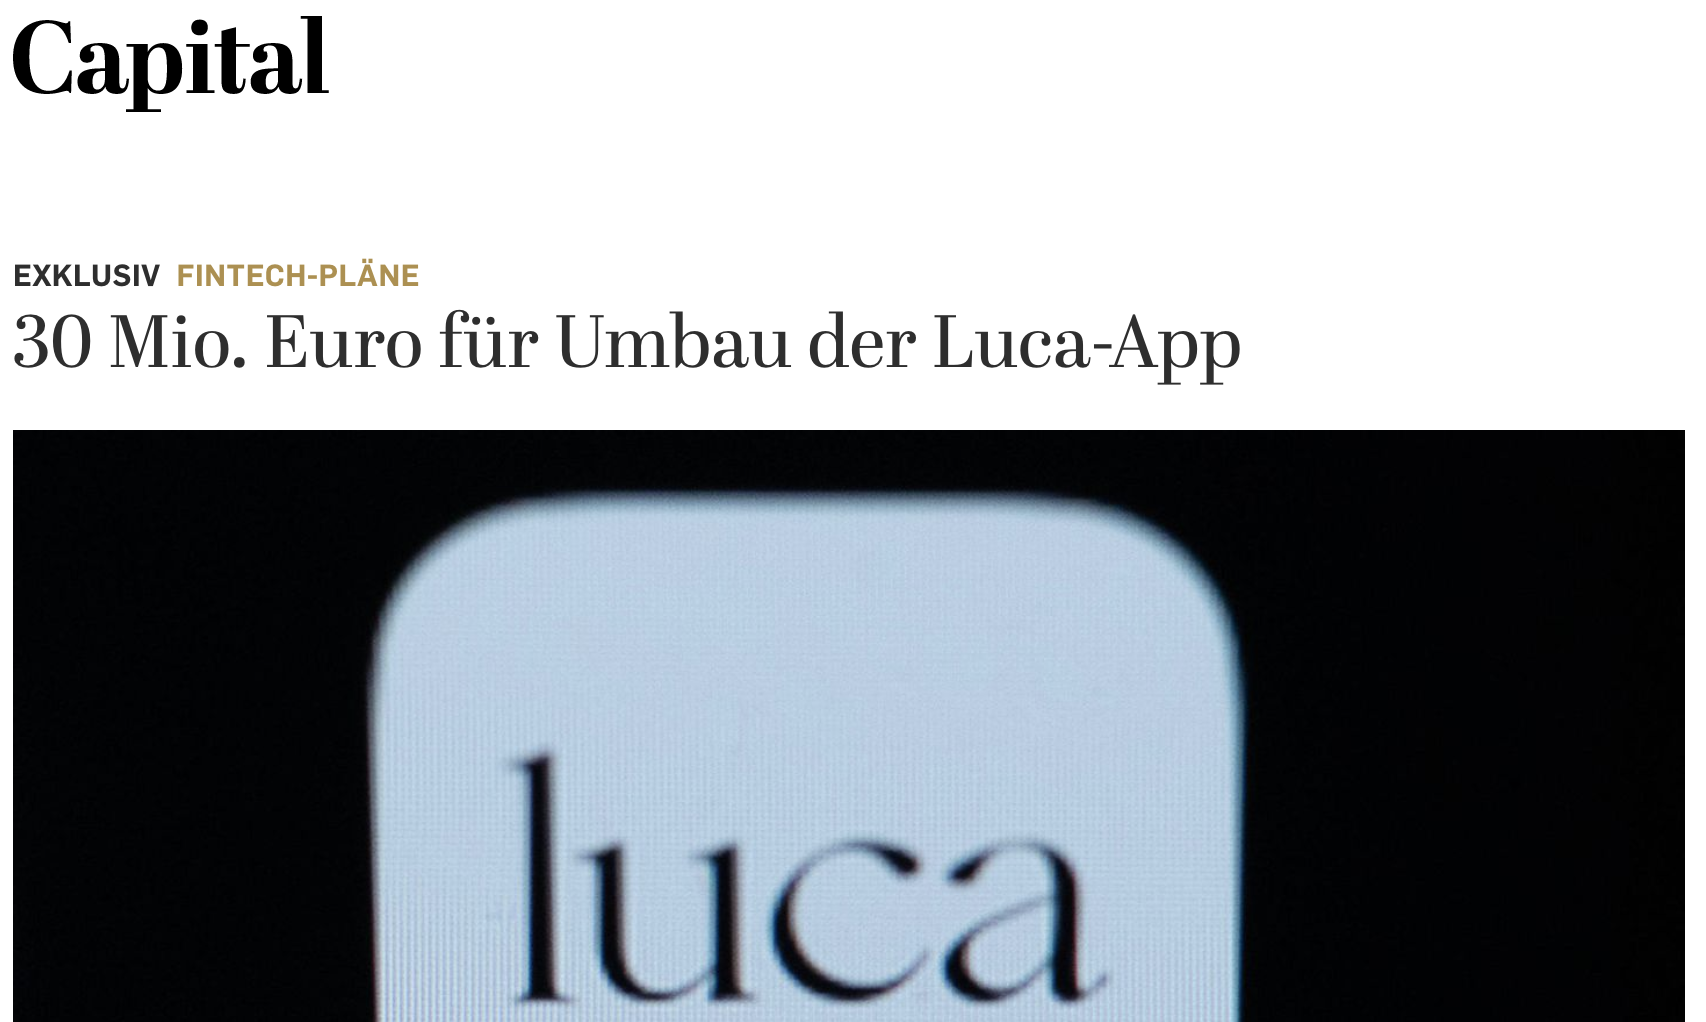 Capital: Fintech-Pläne 30 Mio. Euro für Umbau der Luca-App - April 2022